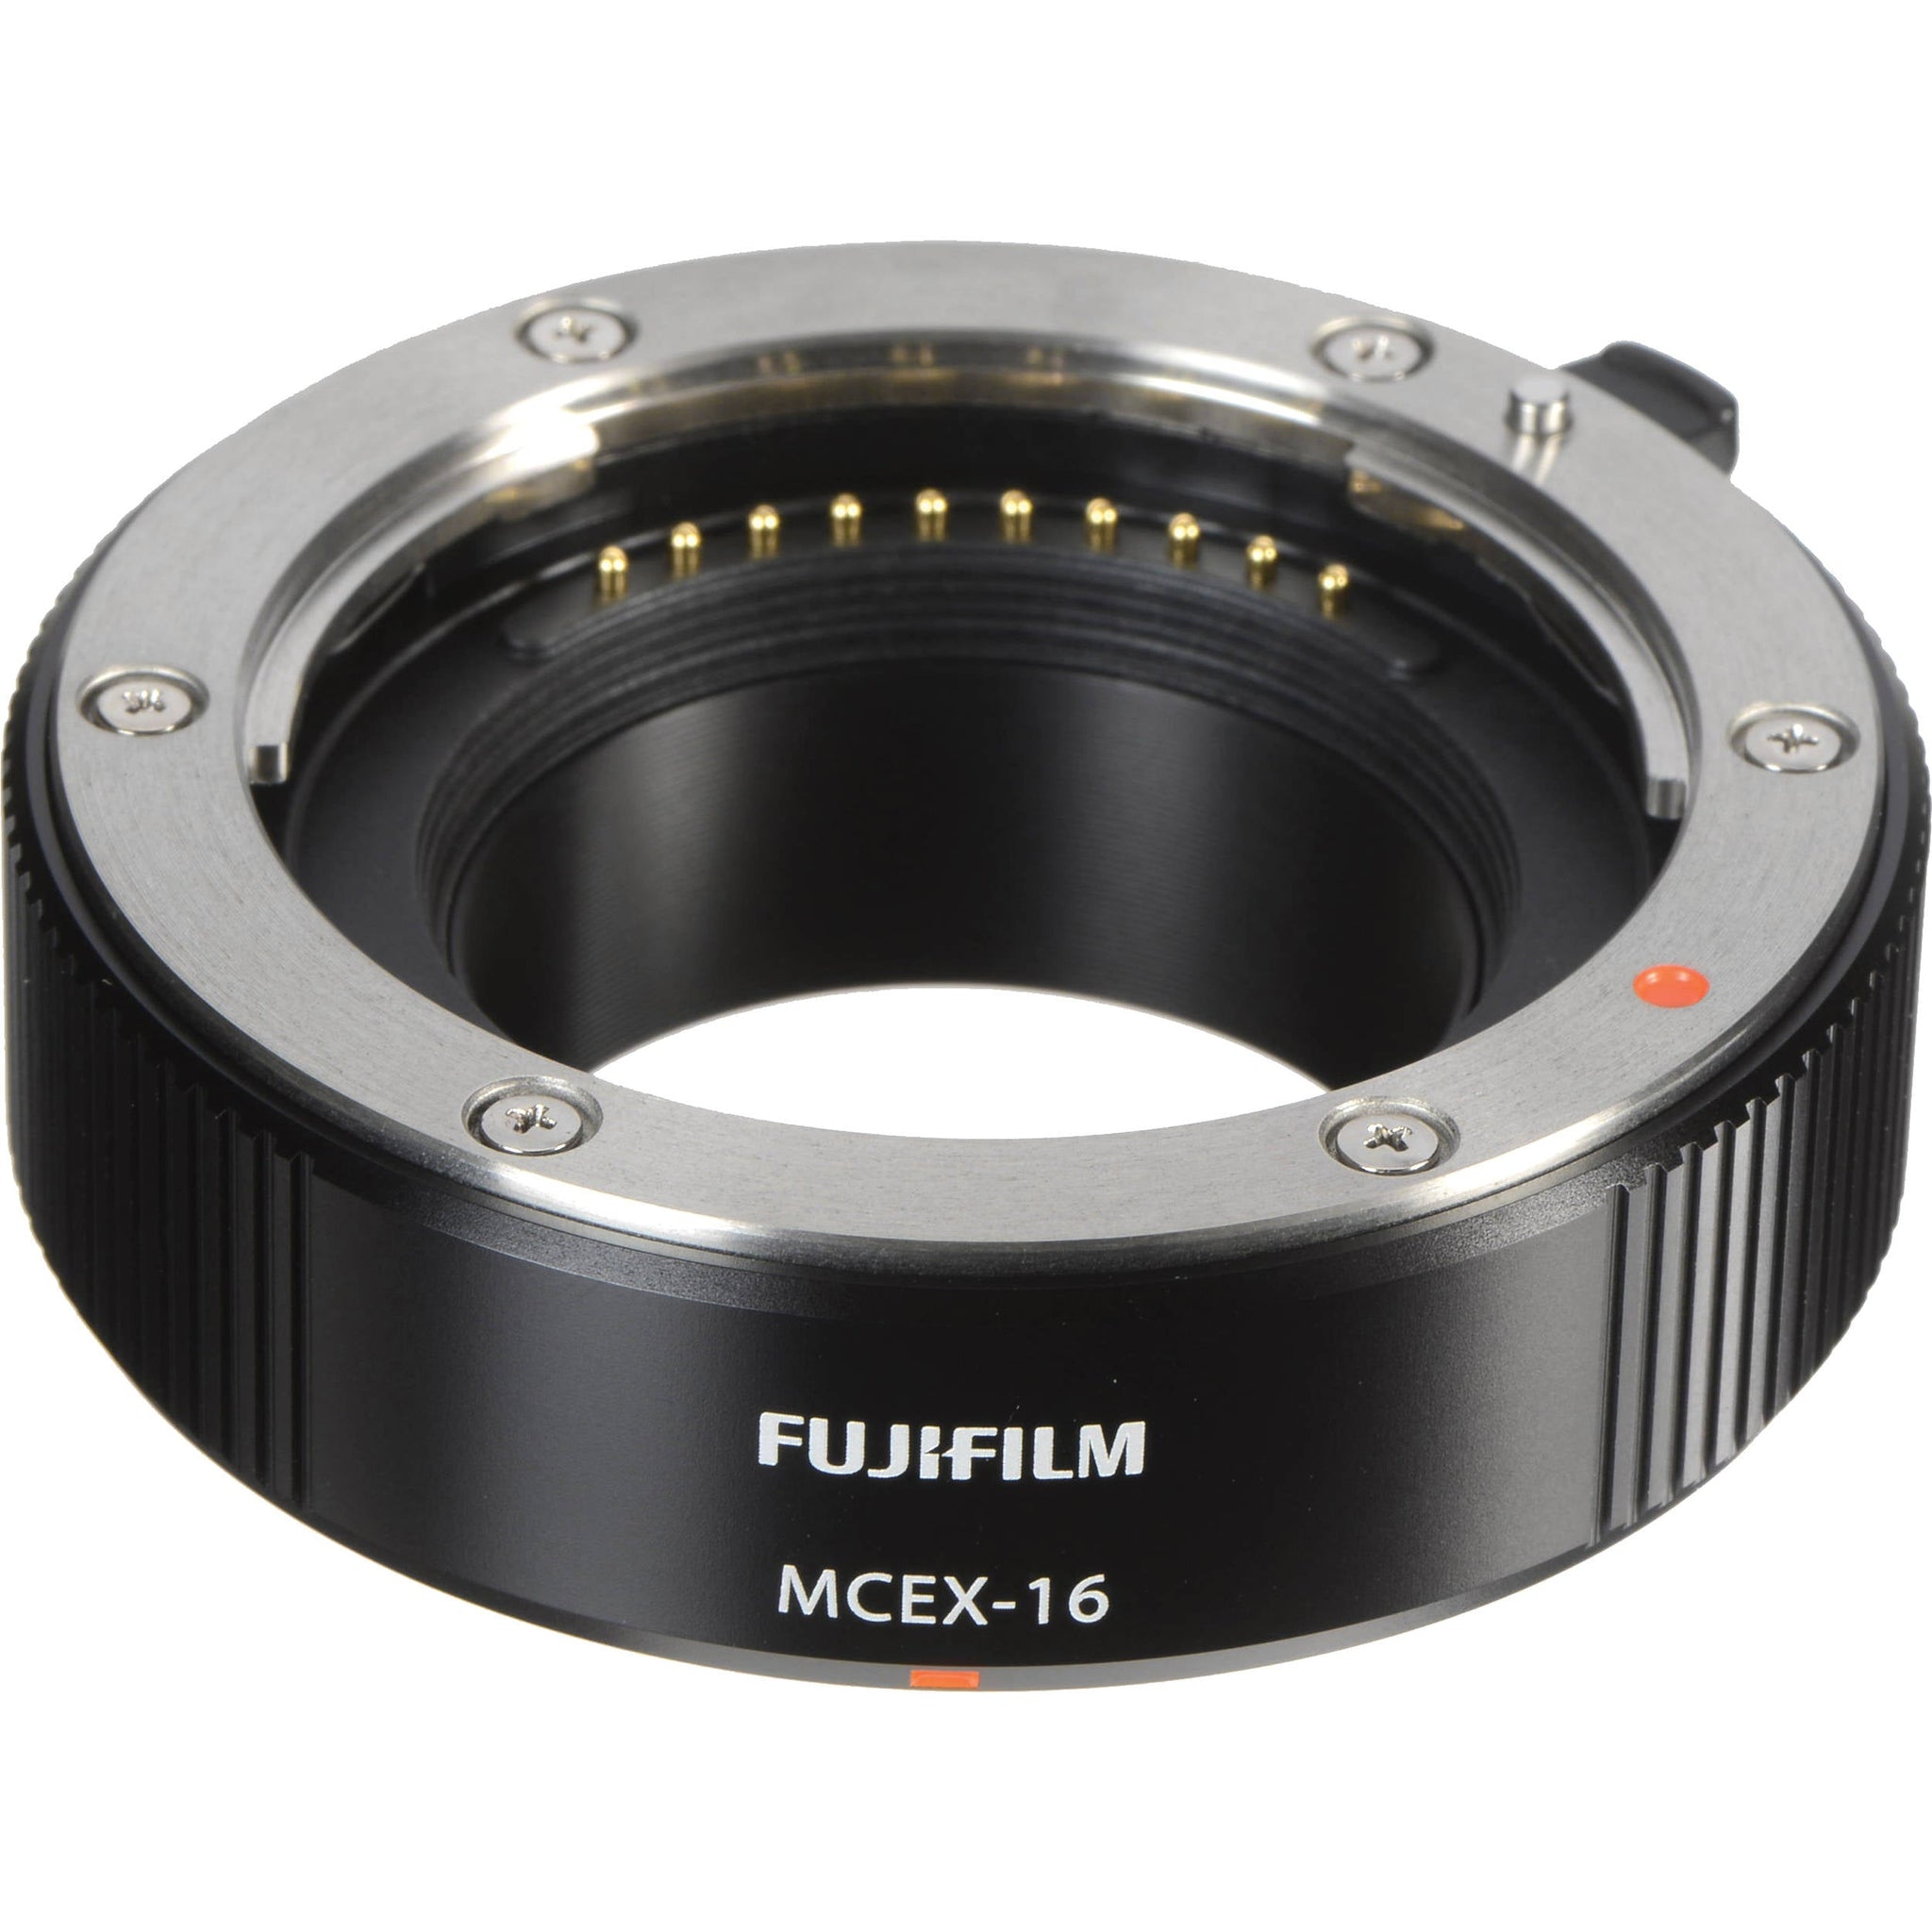 FUJIFILM MCEX-16 16mm Extension Tube for FUJIFILM X-Mount